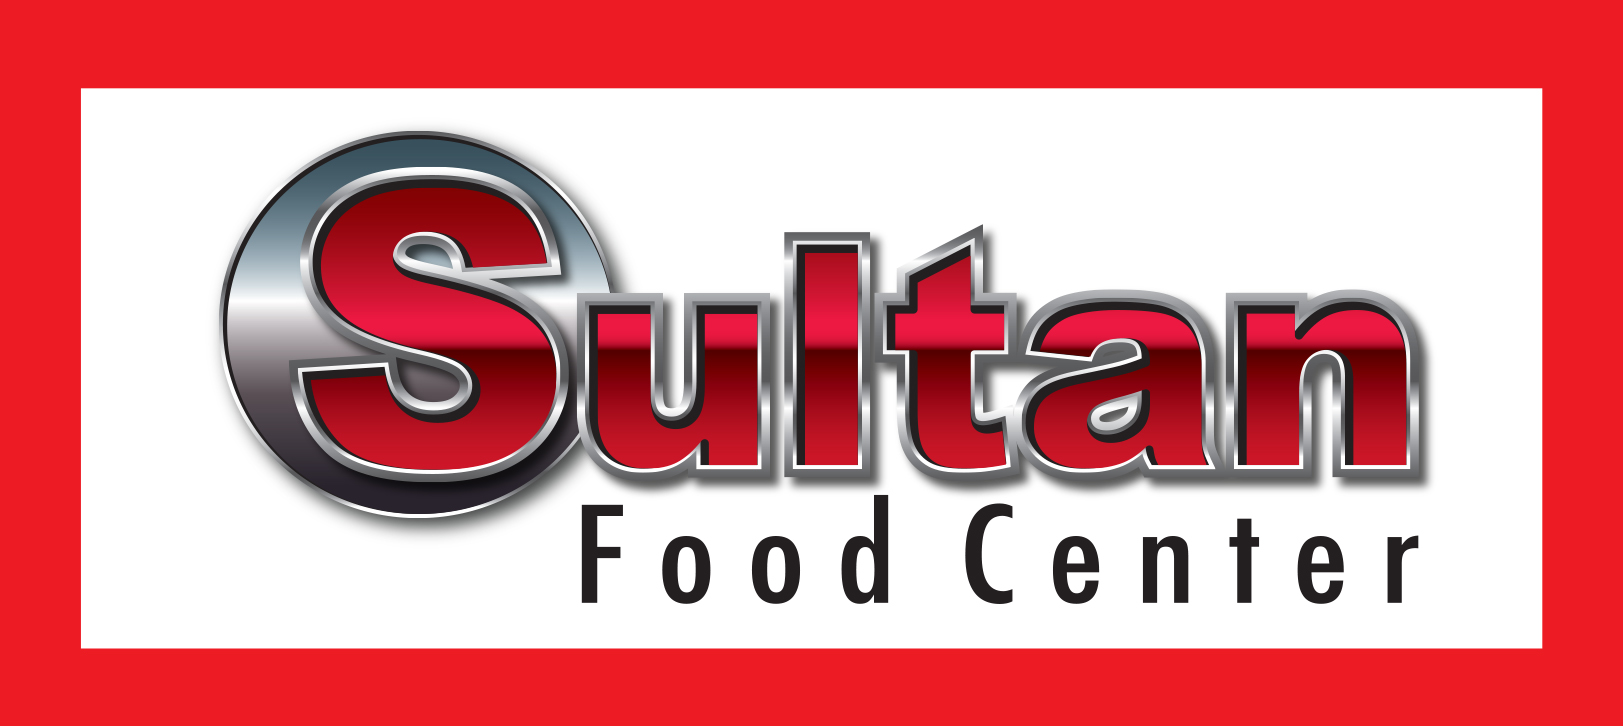 sultan food center